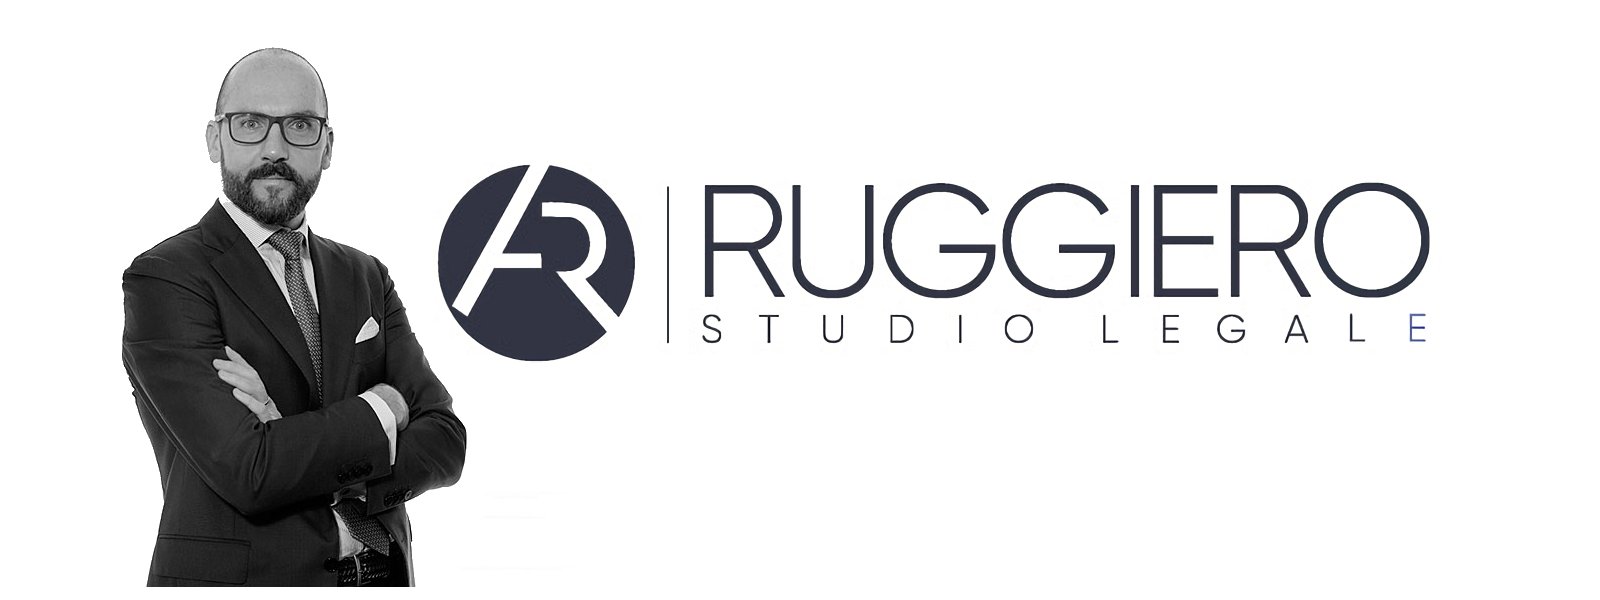 Ruggiero Studio Legale